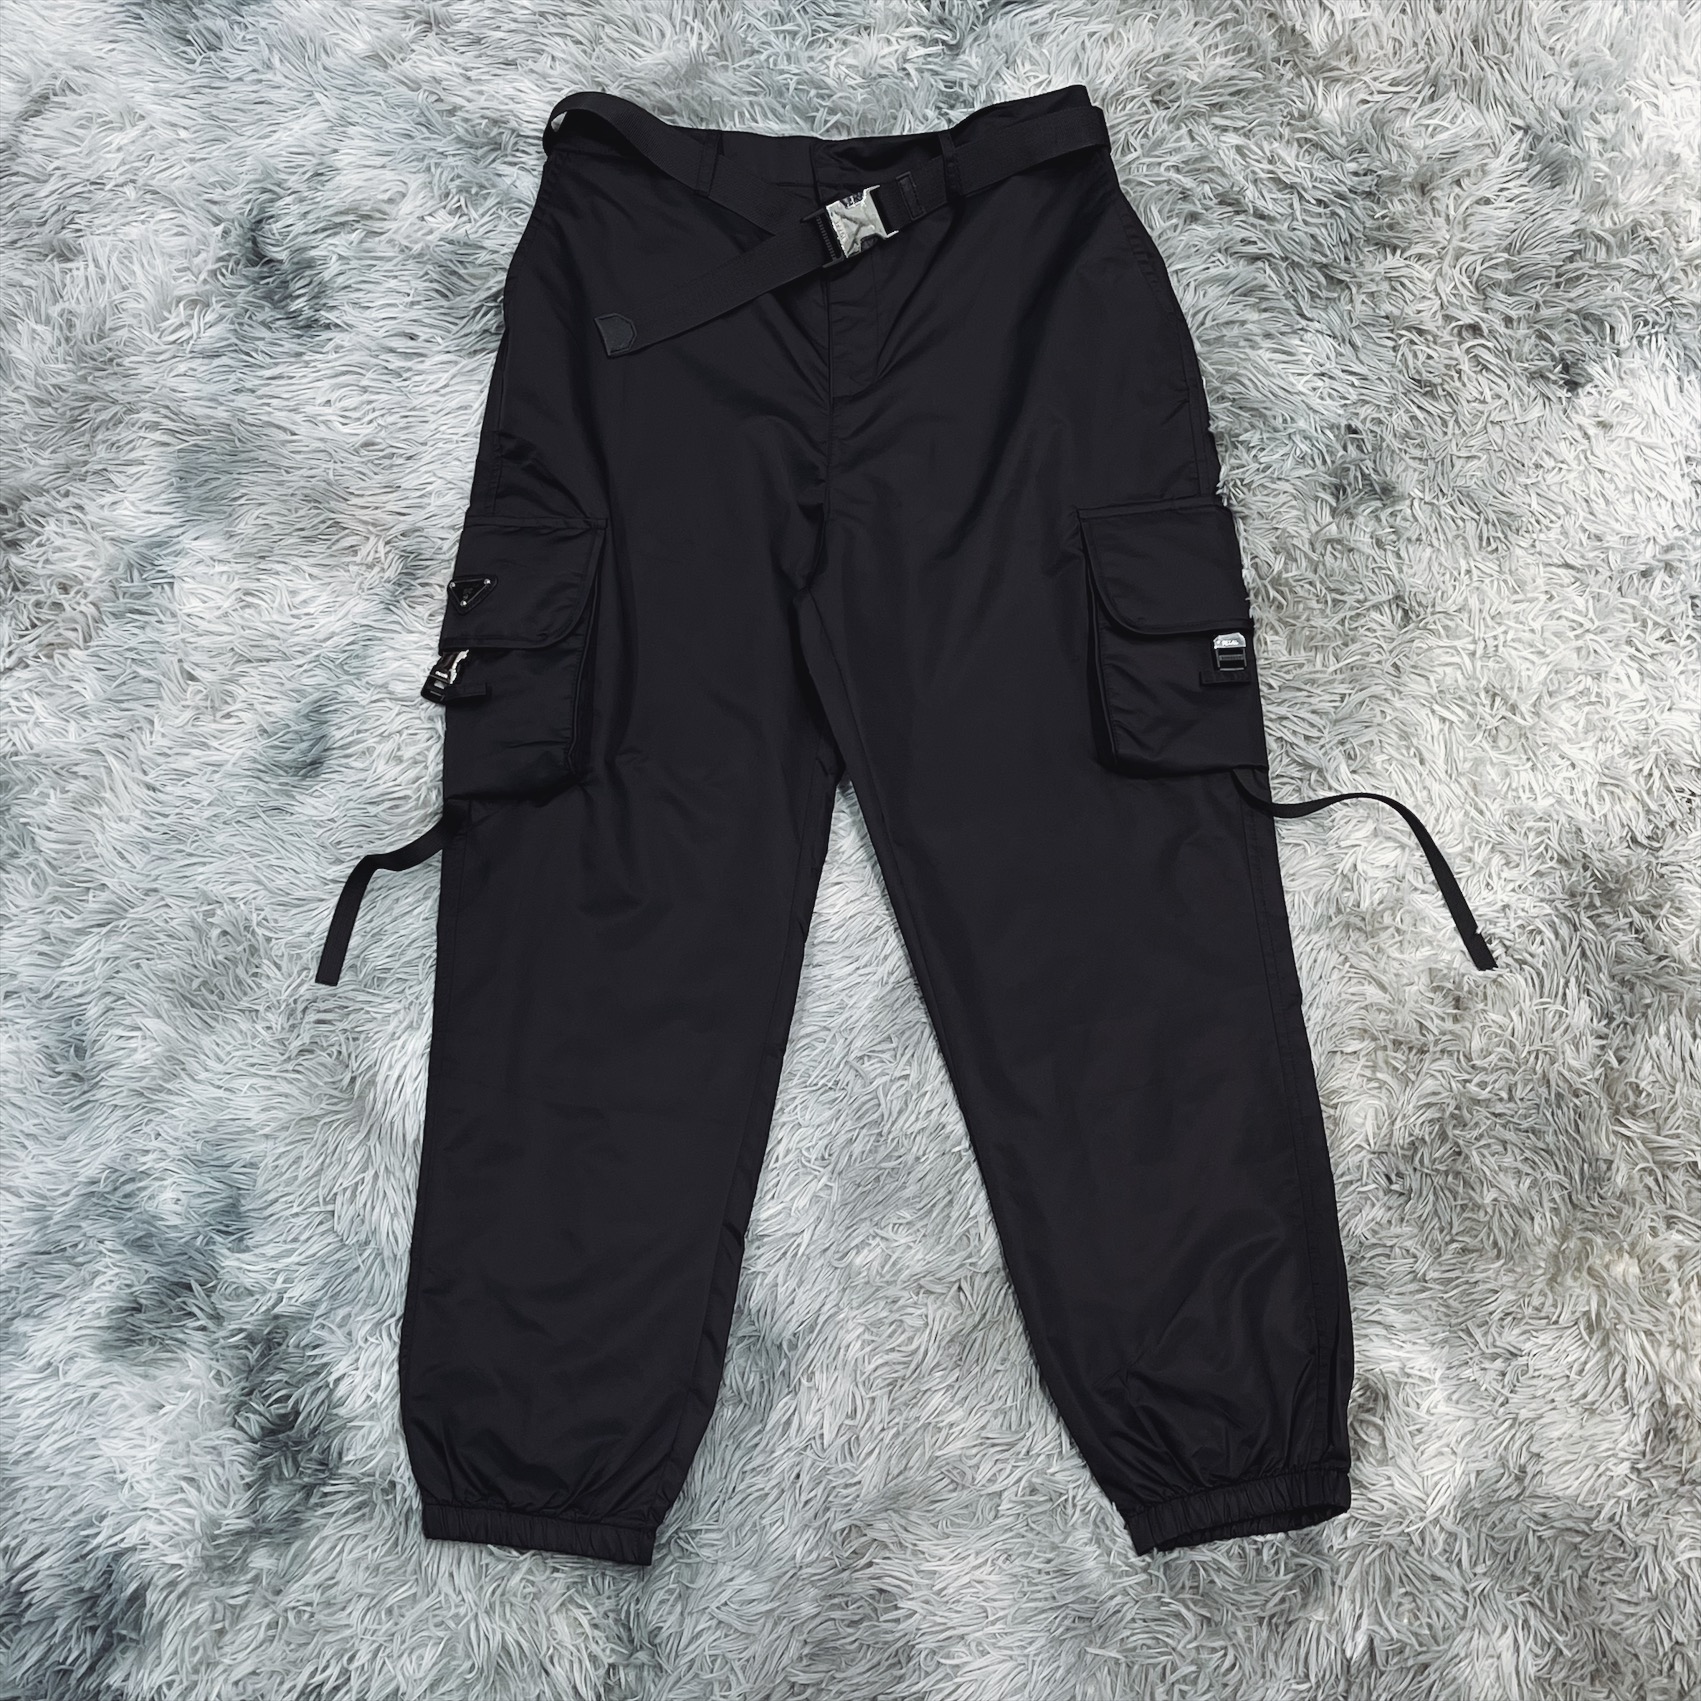 Gucci Web Accent Cargo Pants - Neutrals, 11.75 Rise Pants, Clothing -  GUC1297302